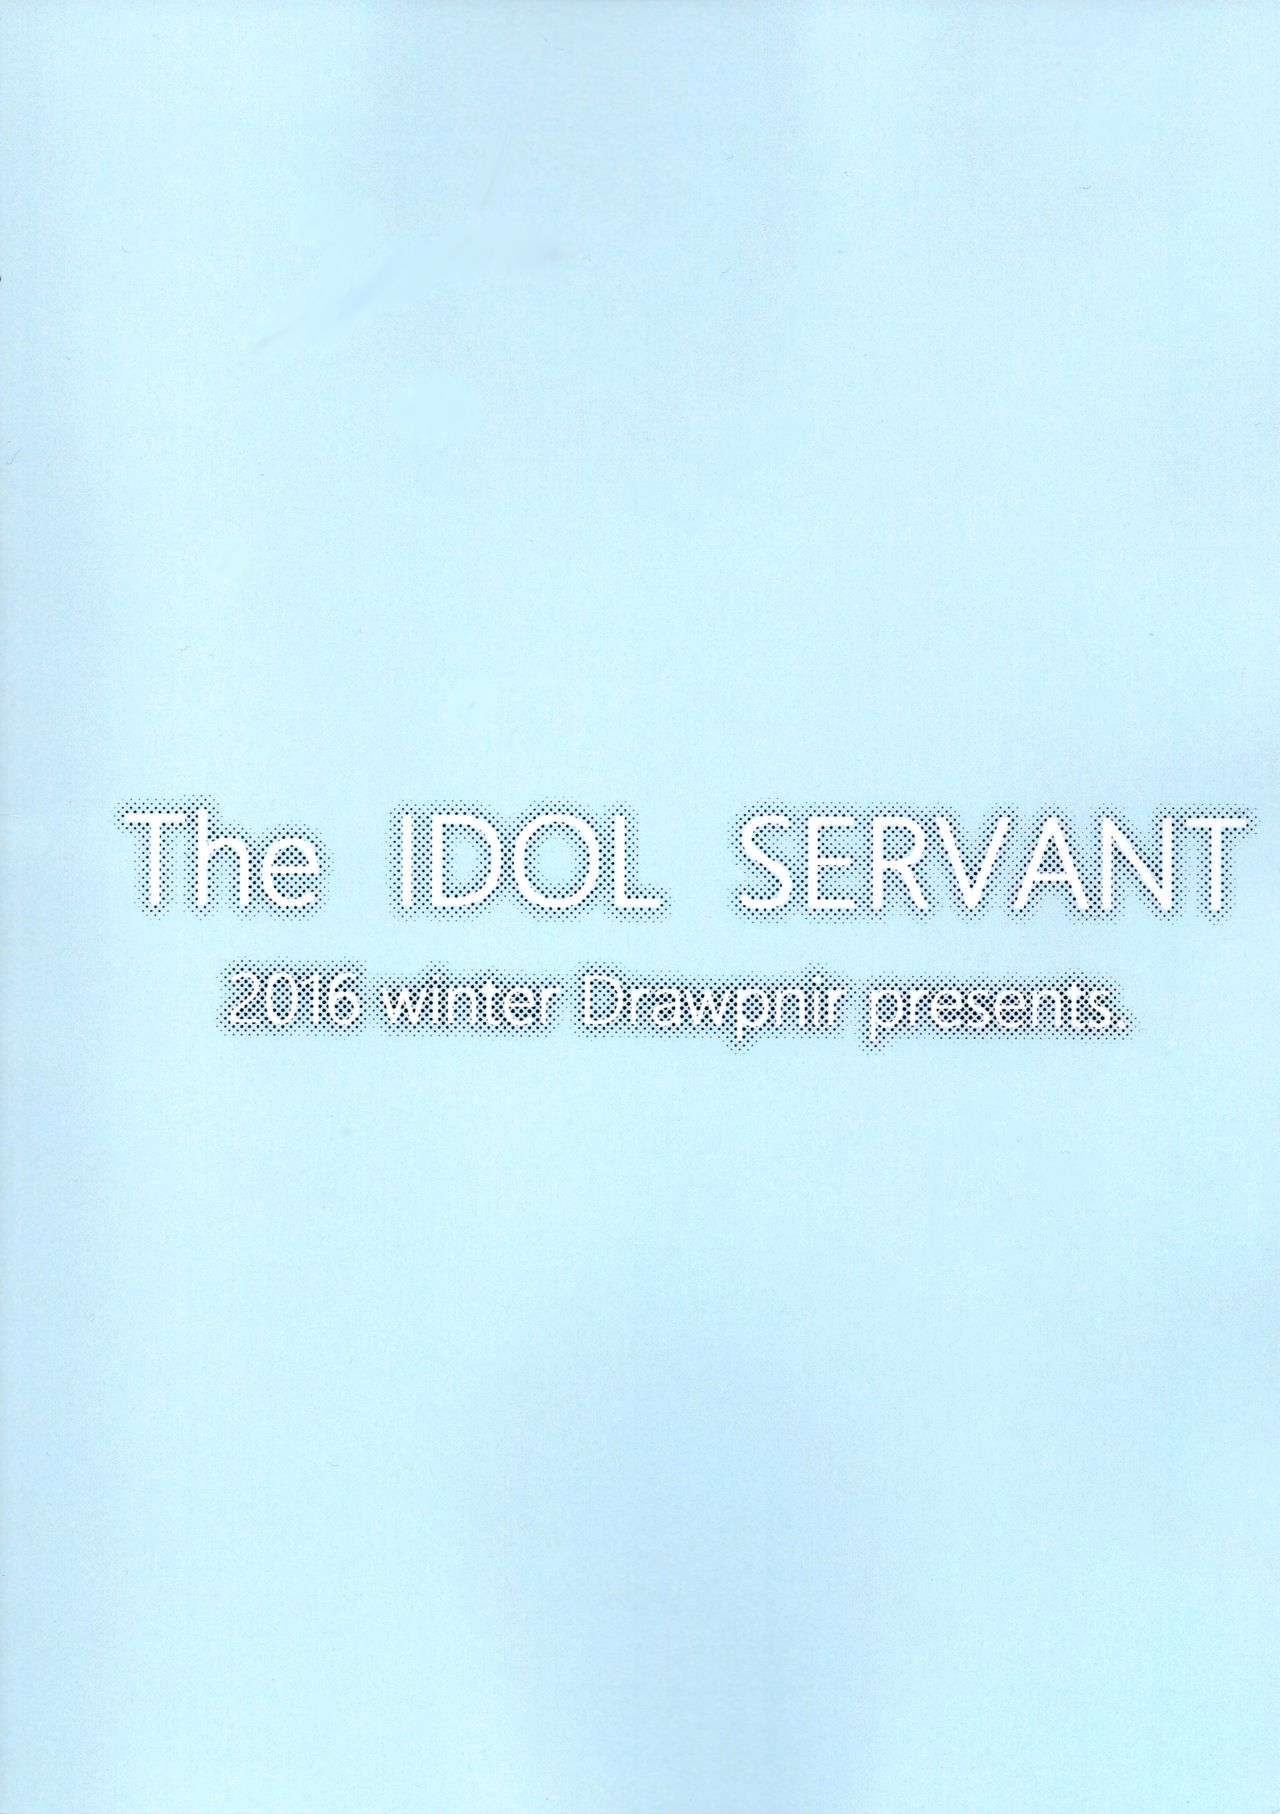 (C91) [Drawpnir (明地雫)] The IDOL SERVANT (Fate/Grand Order) [英訳]